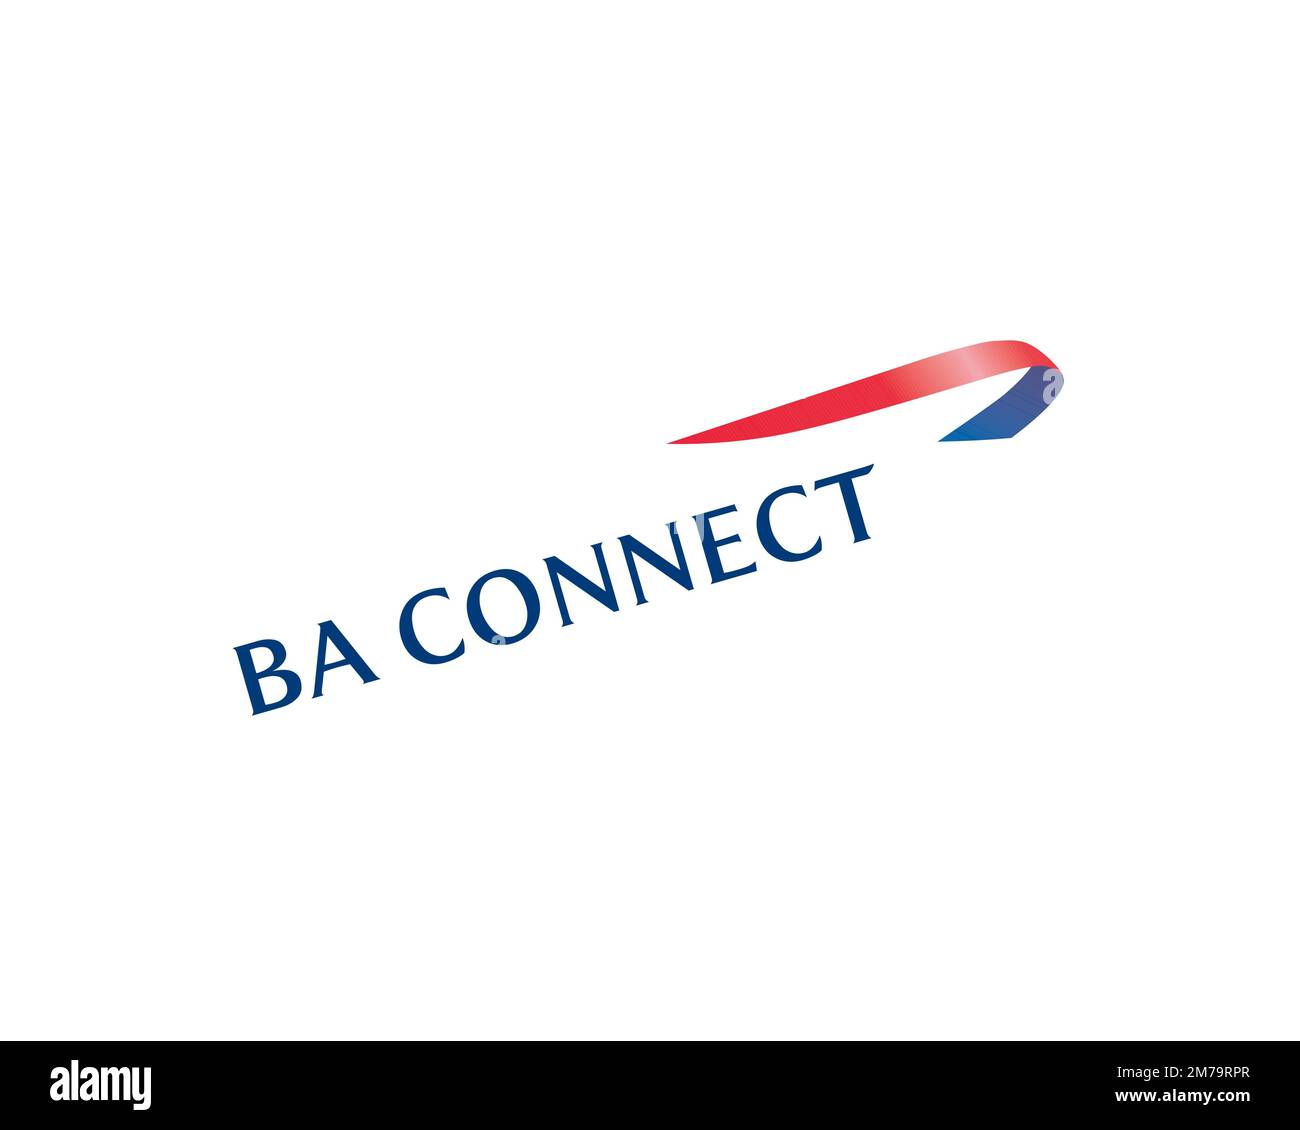 BA Connect, logo ruotato, sfondo bianco Foto Stock